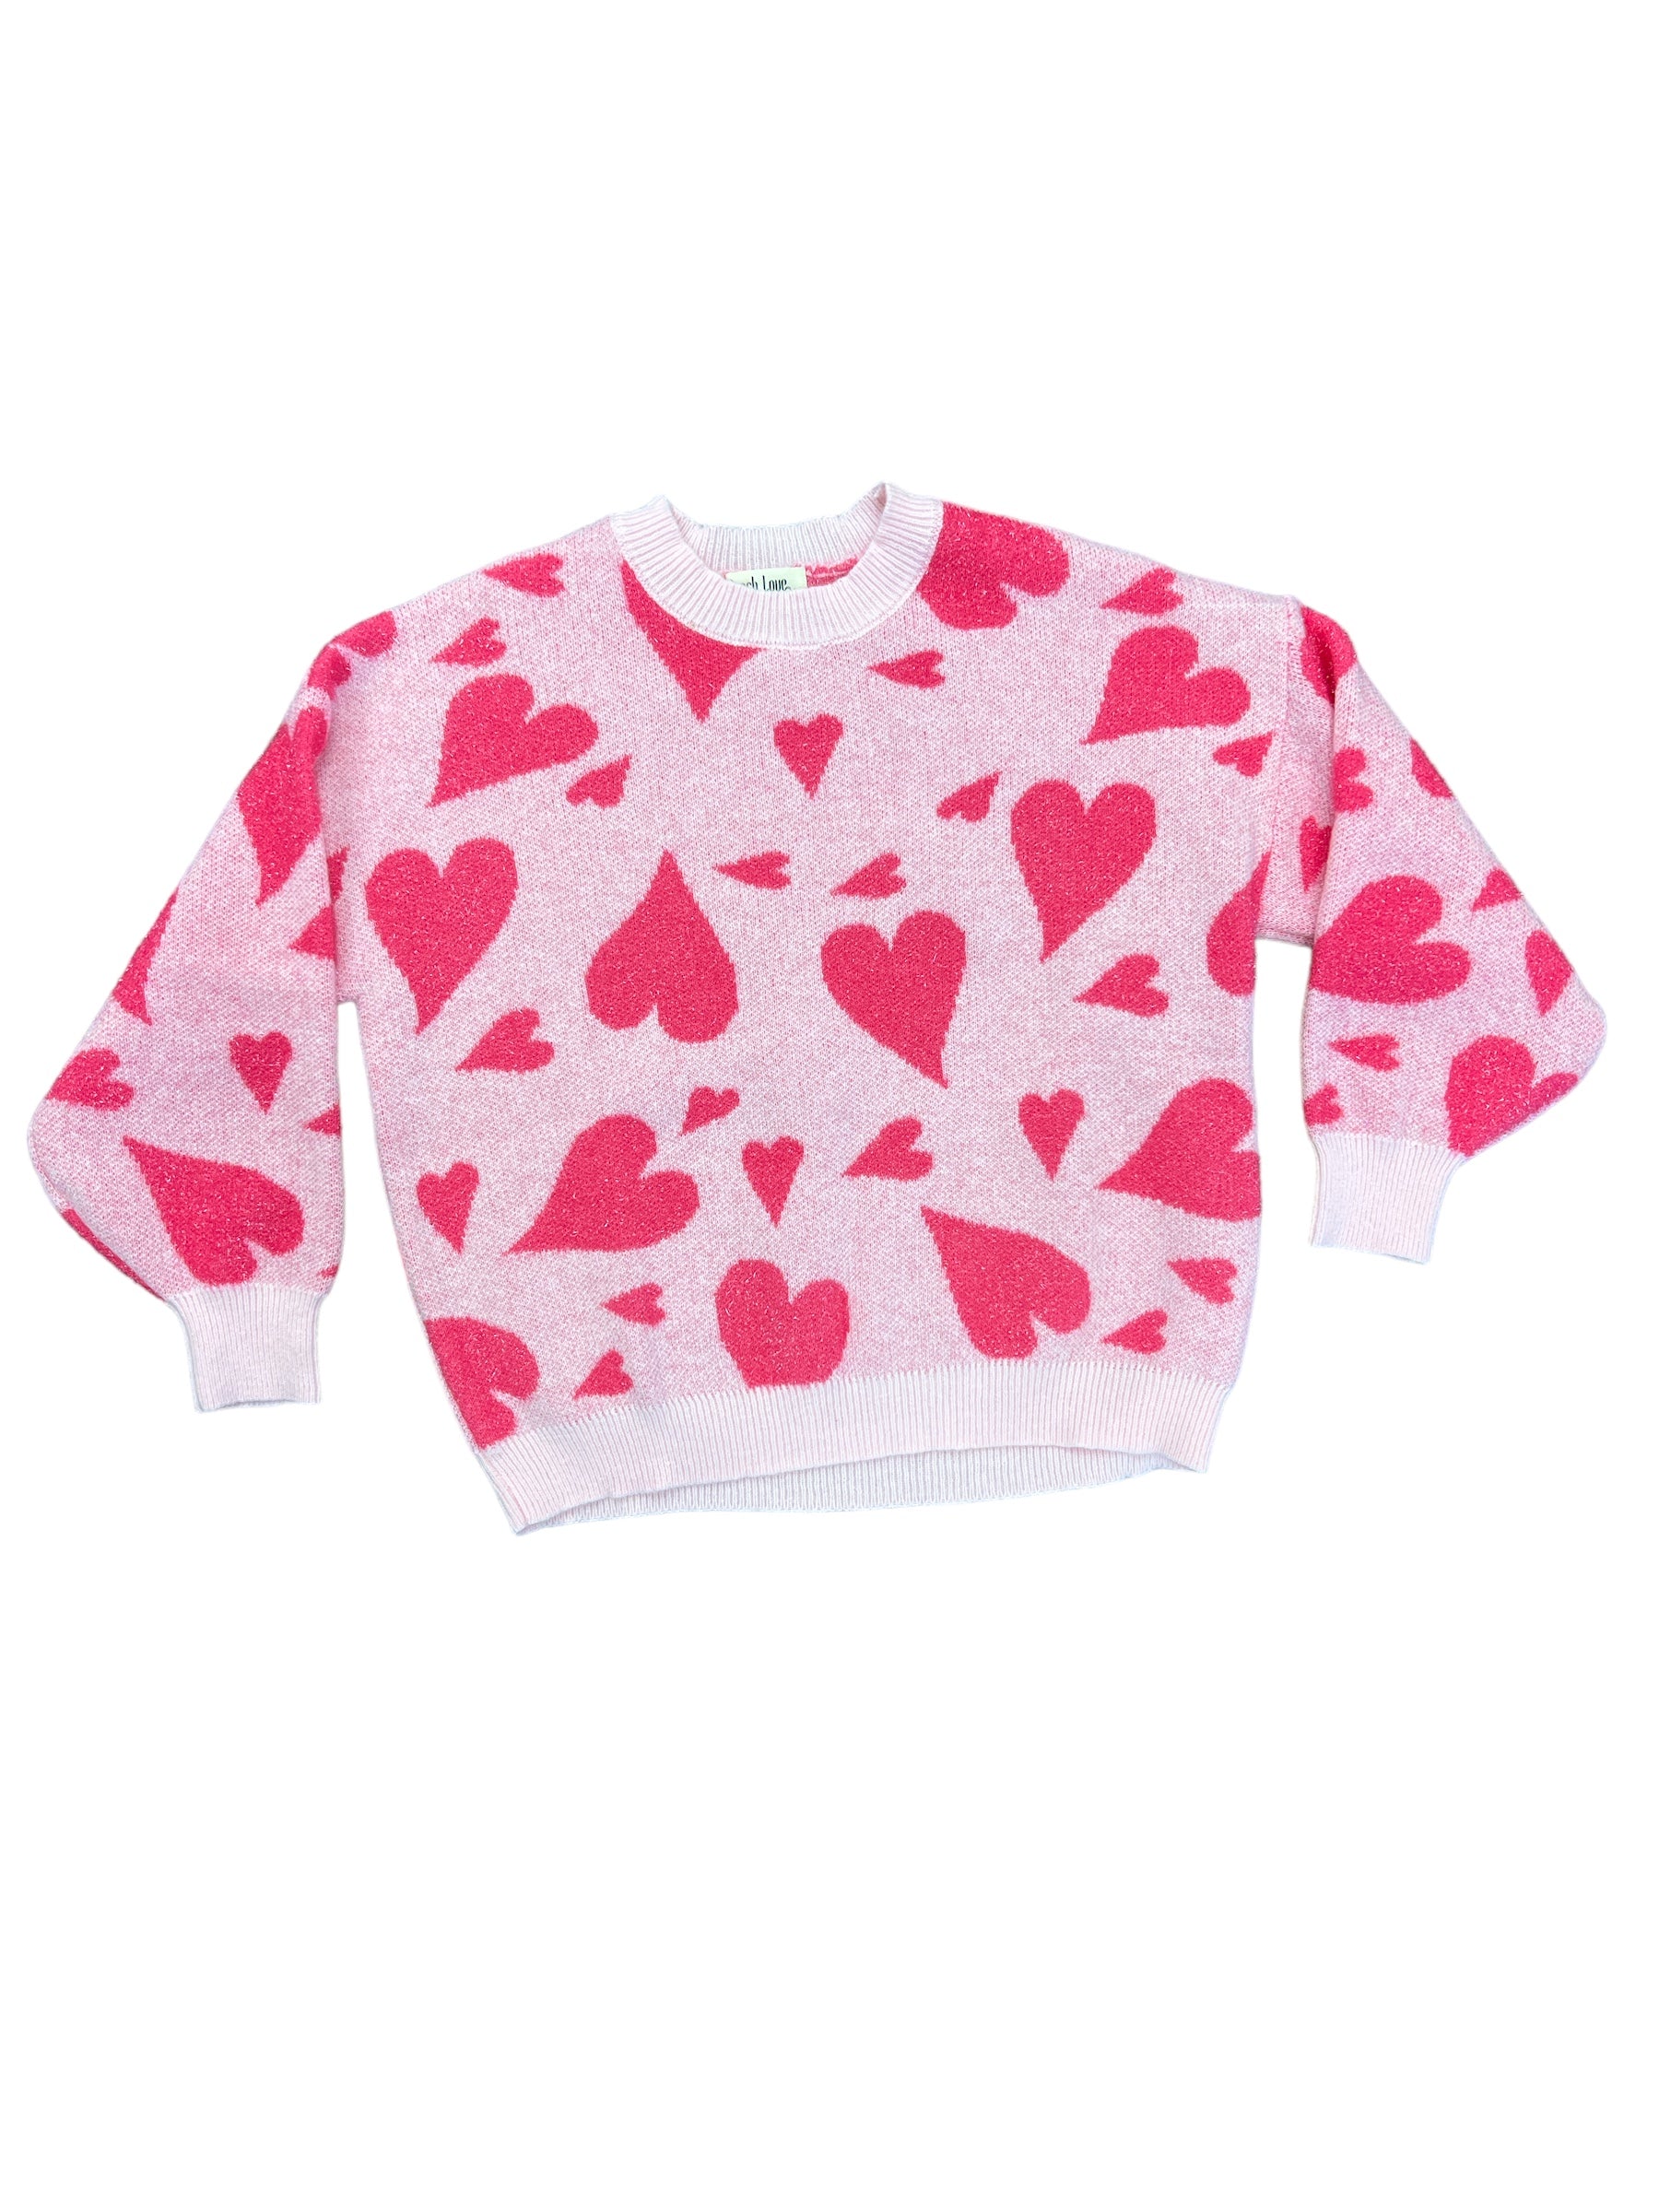 Shiny Hearts Sweater-140 Sweaters, Cardigans & Sweatshirts-Simply Stylish Boutique-Simply Stylish Boutique | Women’s & Kid’s Fashion | Paducah, KY